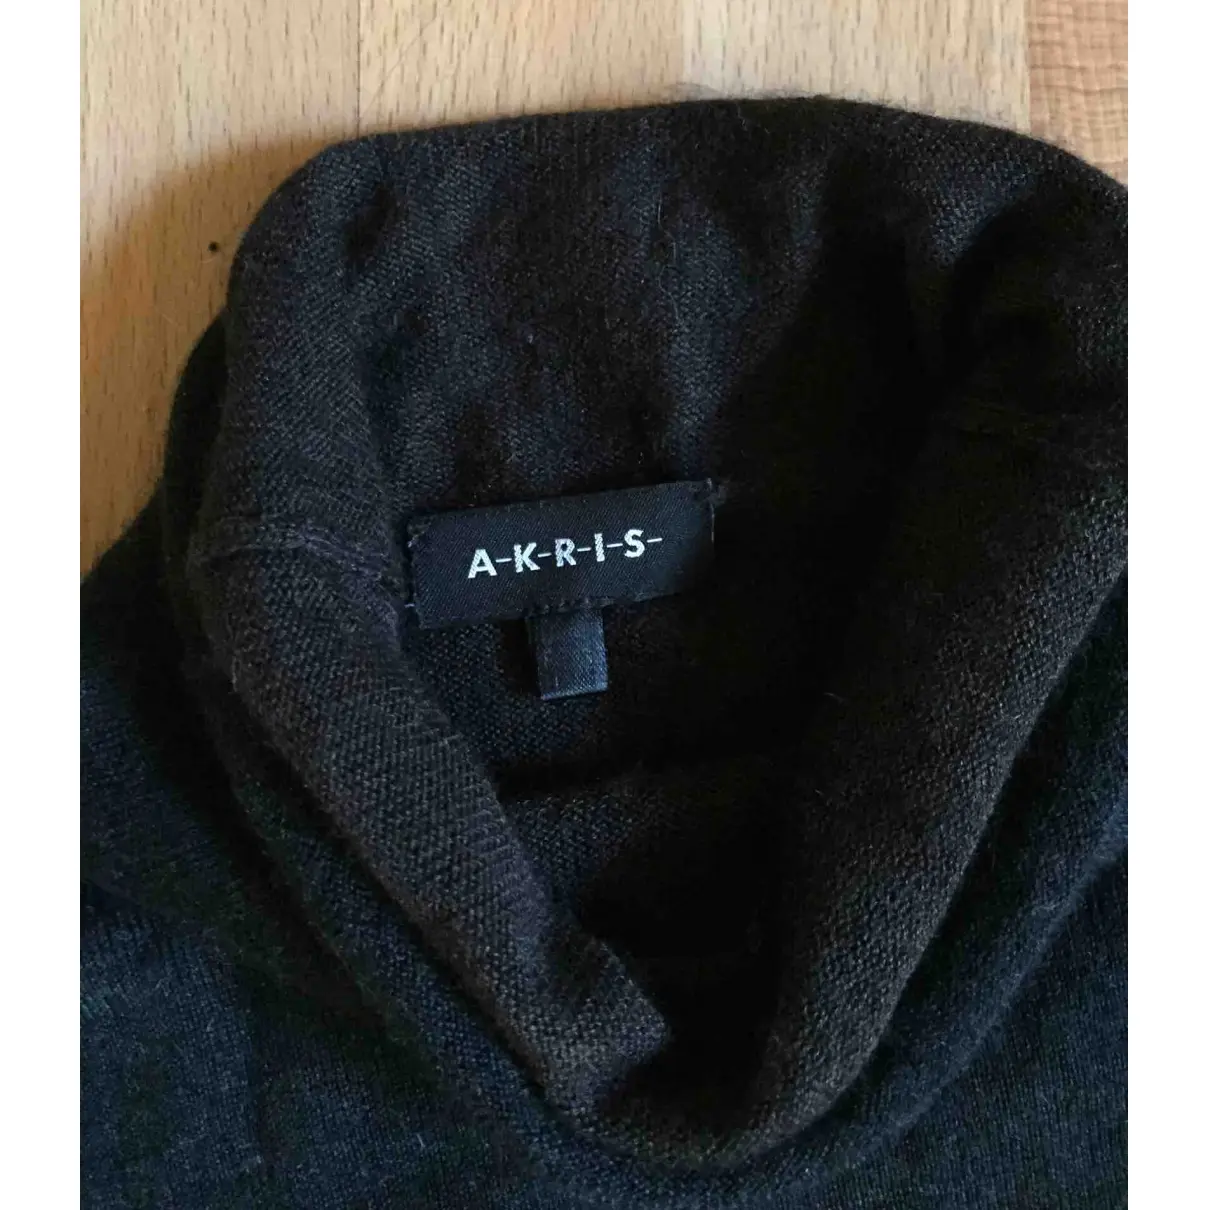 Akris Cashmere jumper for sale